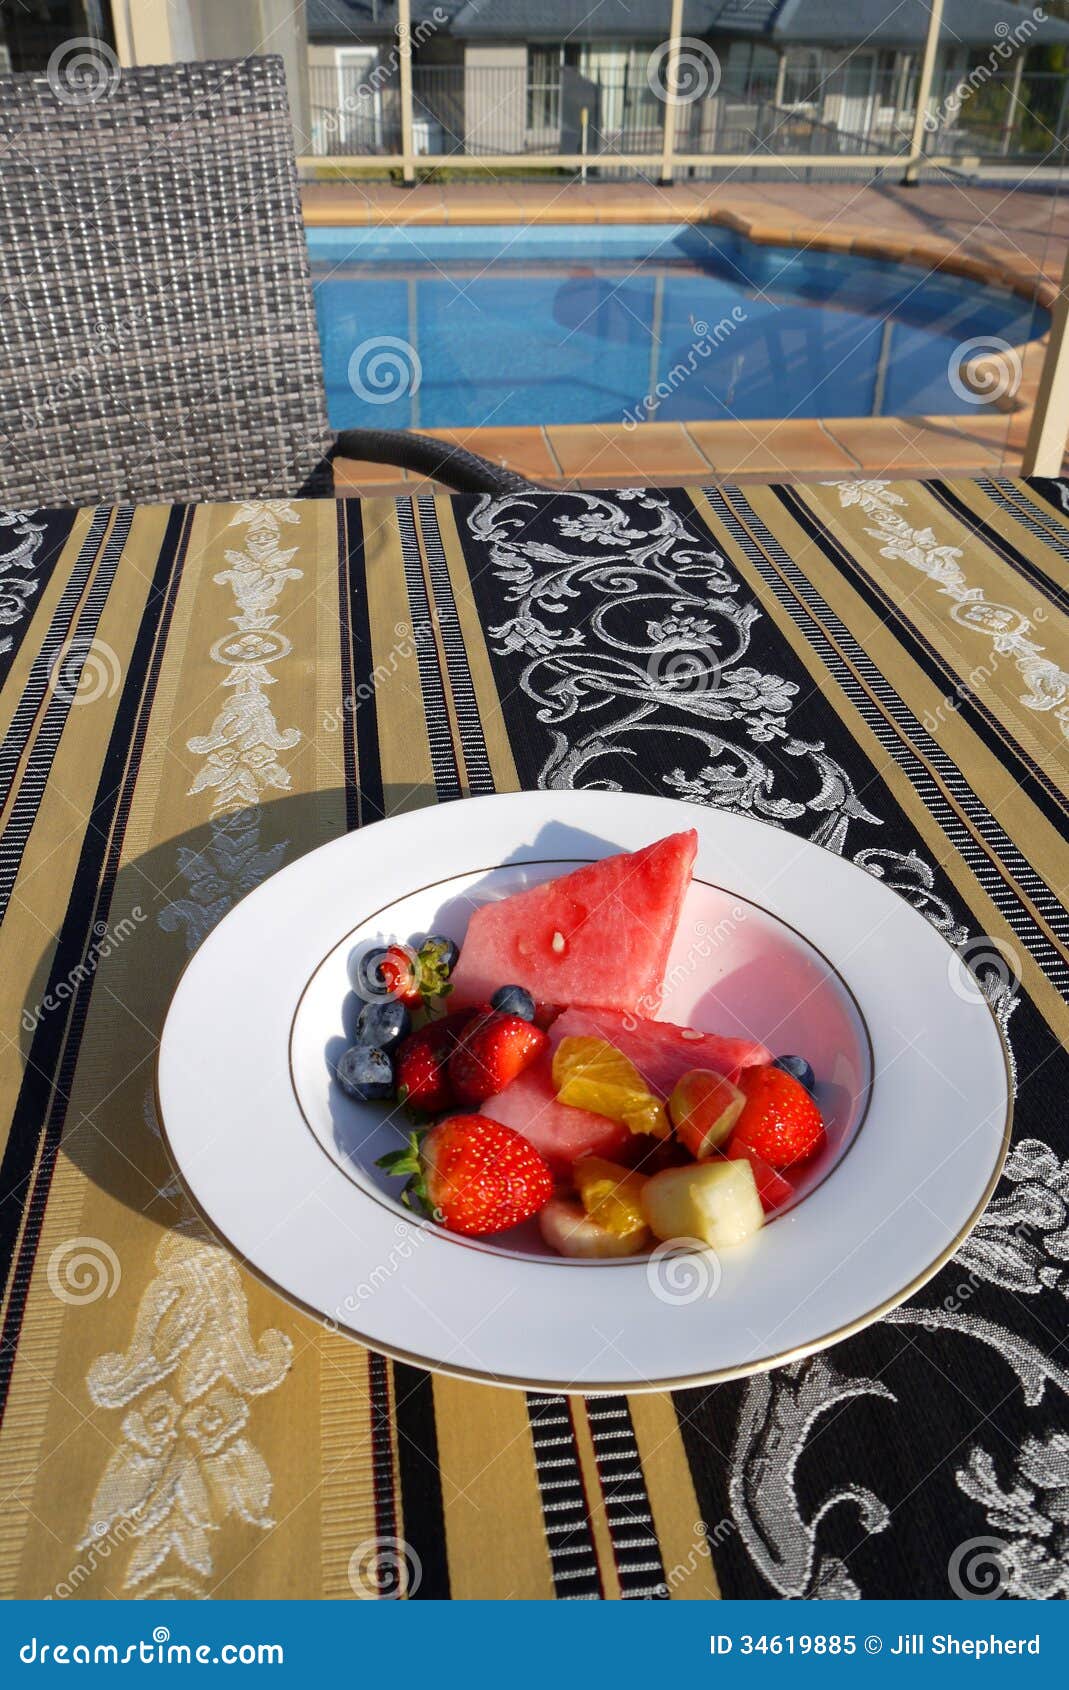 Australia: outdoor breakfast by pool. Breakfast fresh fruit salad by outdoor swimming pool